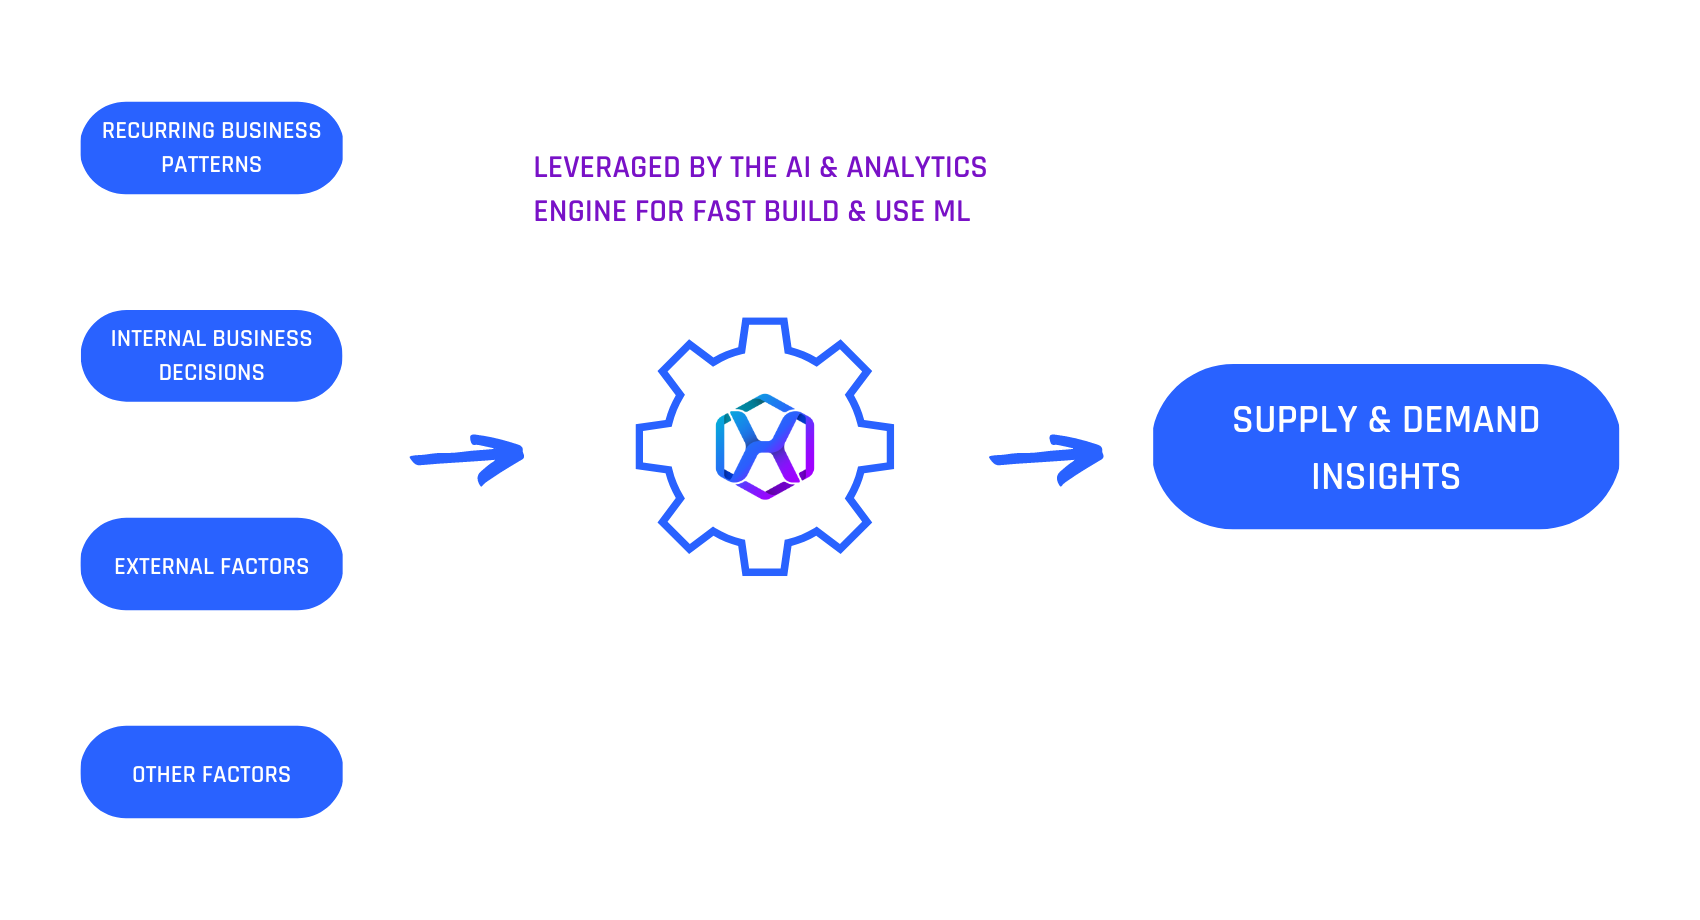 Supply & demand insights with the AI & Analytics Engine